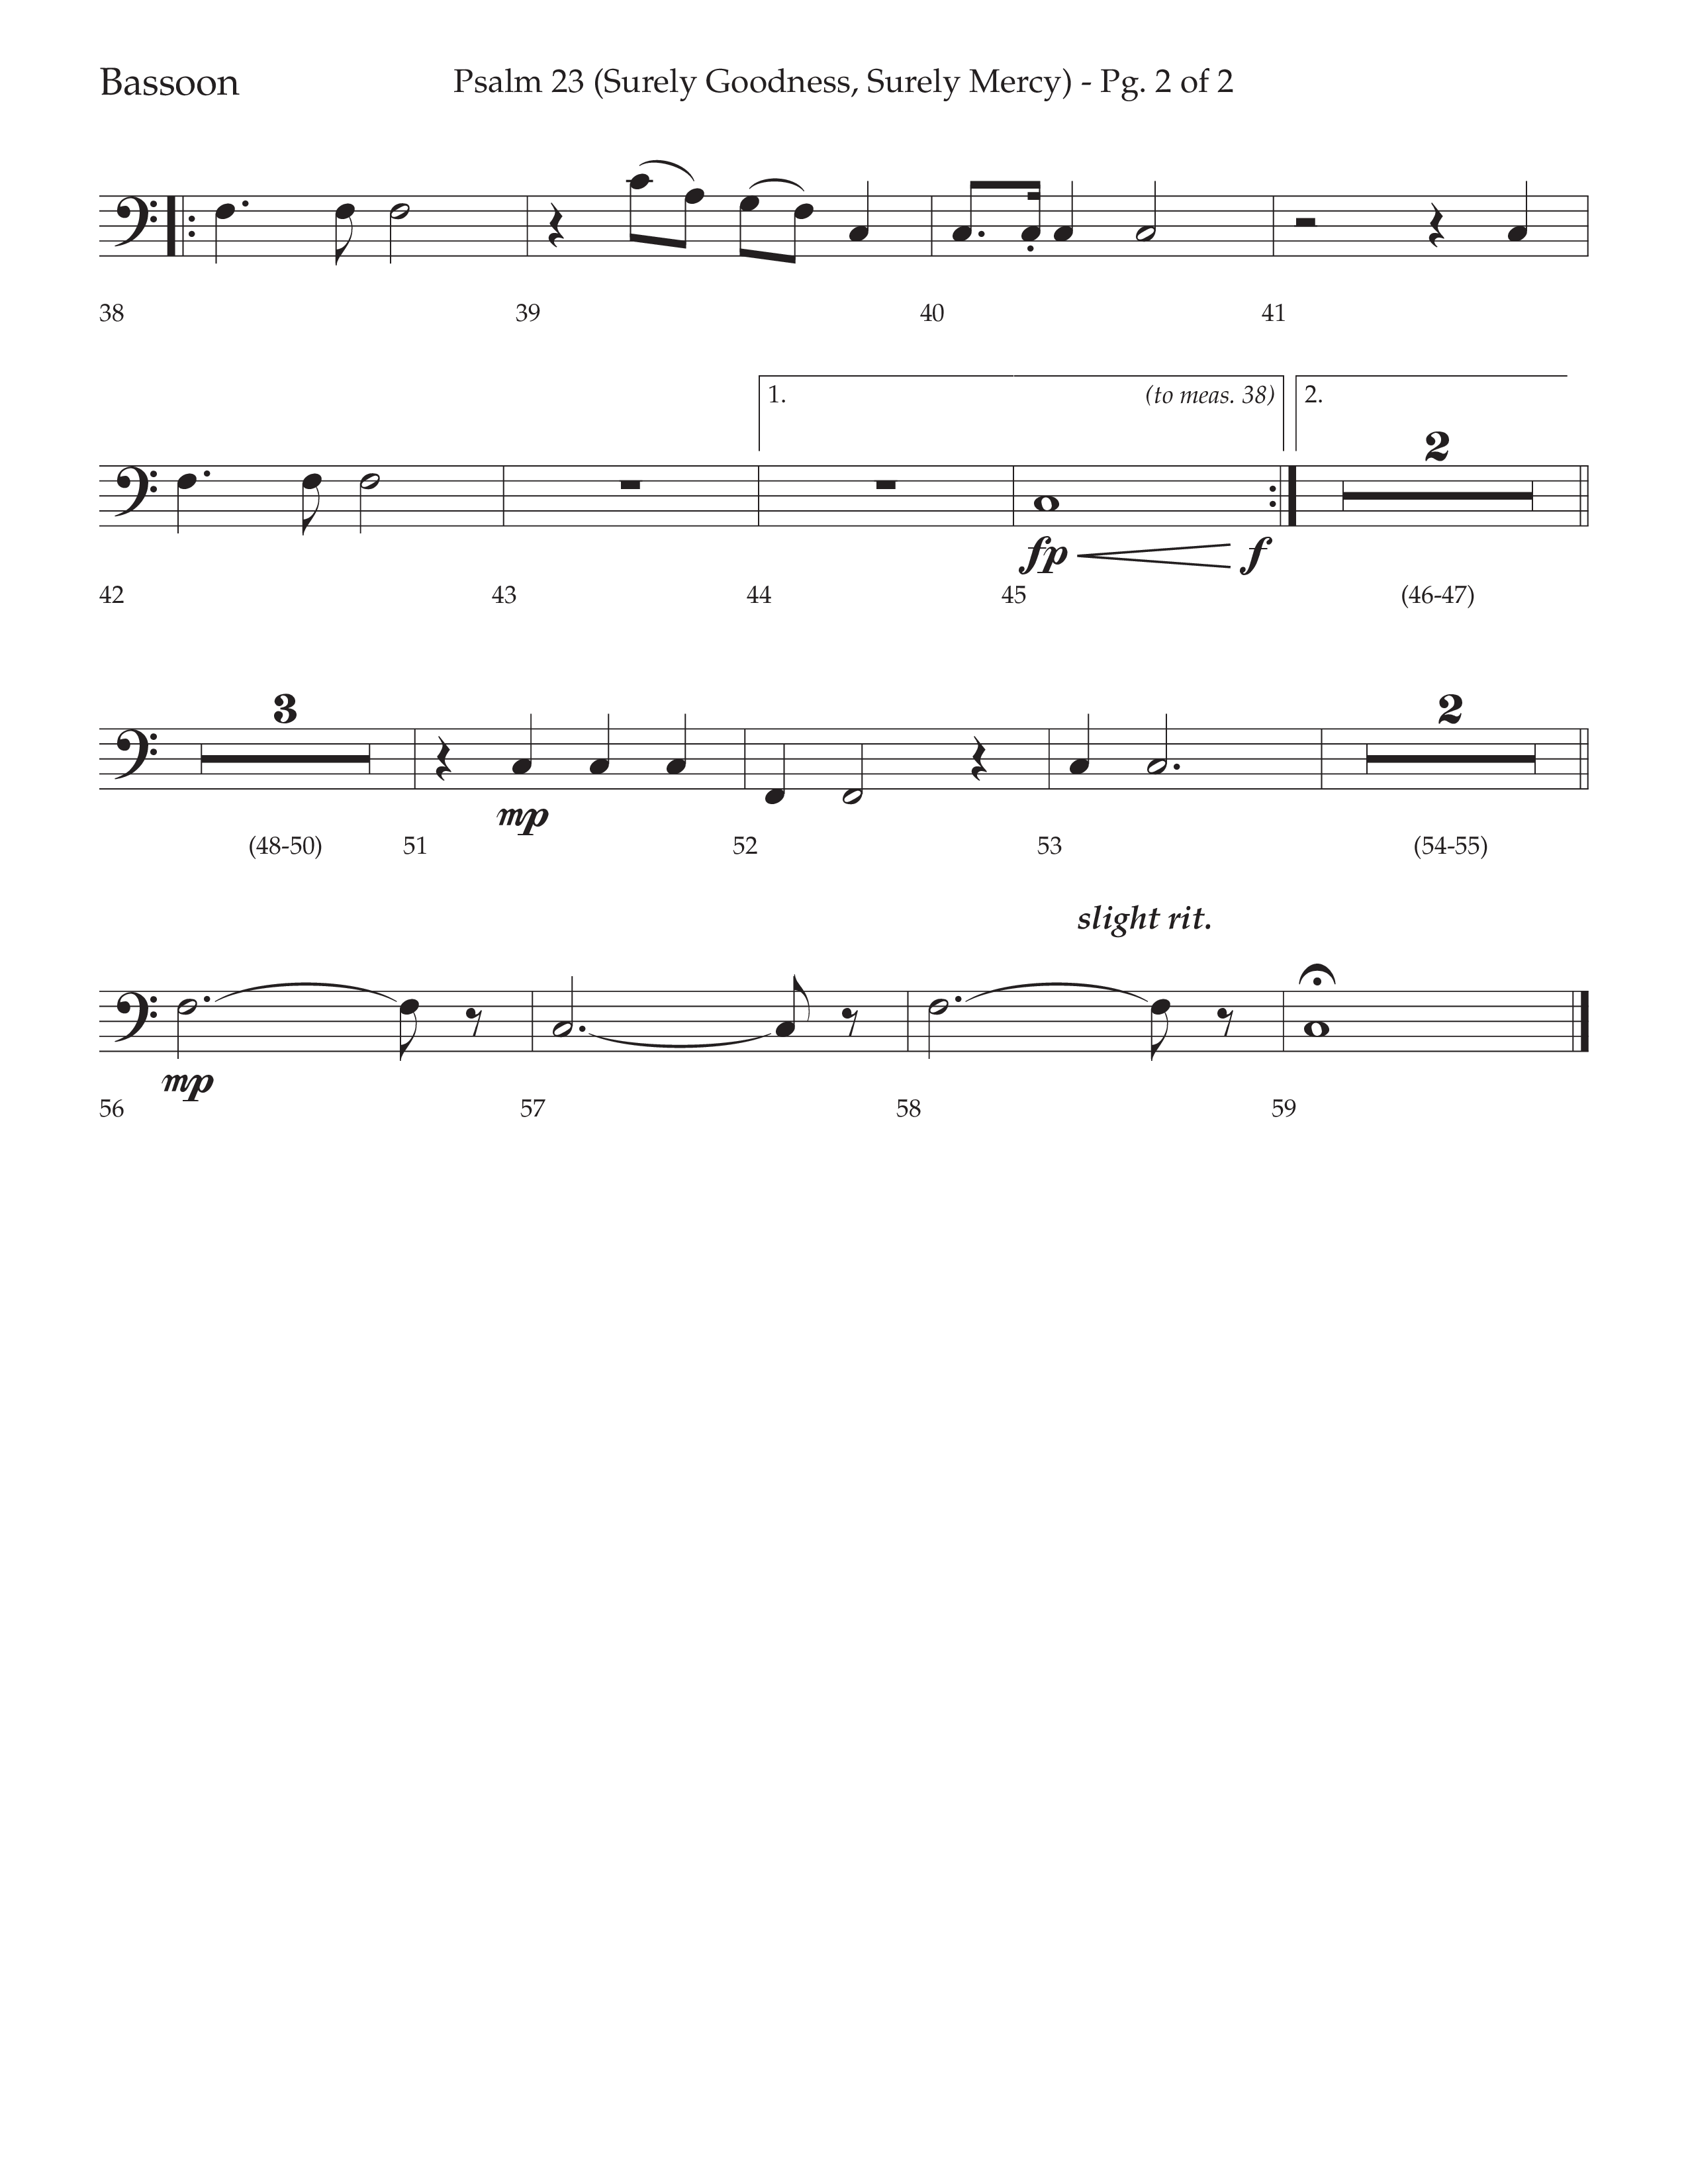 Psalm 23 (Surely Goodness) (Choral Anthem SATB) Bassoon (Lifeway Choral / Arr. Craig Adams / Orch. Russell Mauldin)